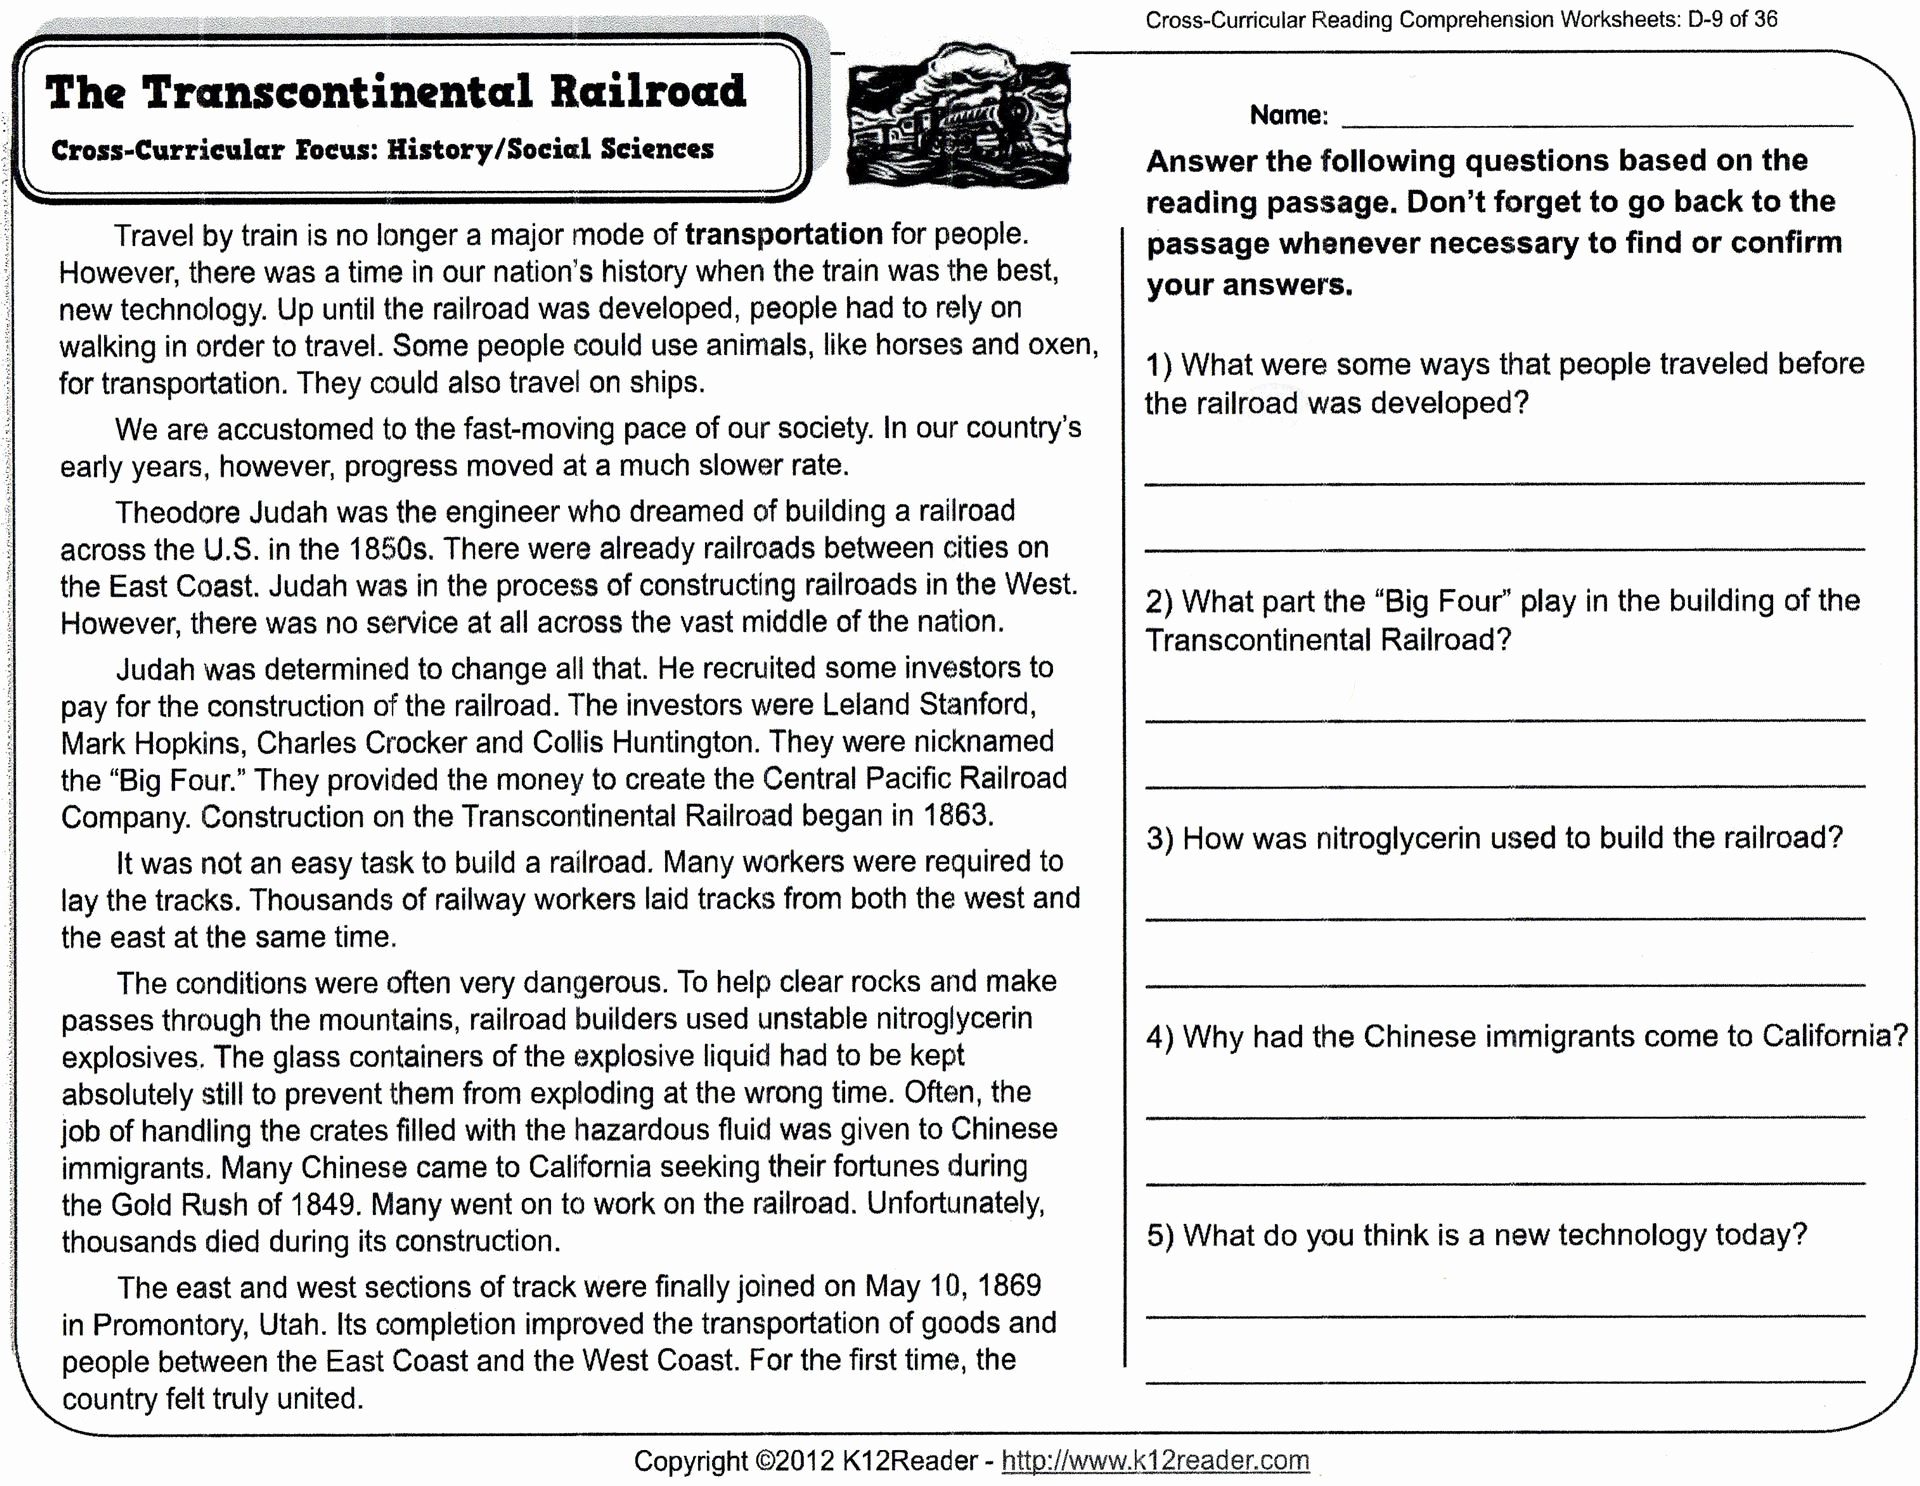 free-printable-comprehension-worksheets-for-5th-grade-lexias-blog